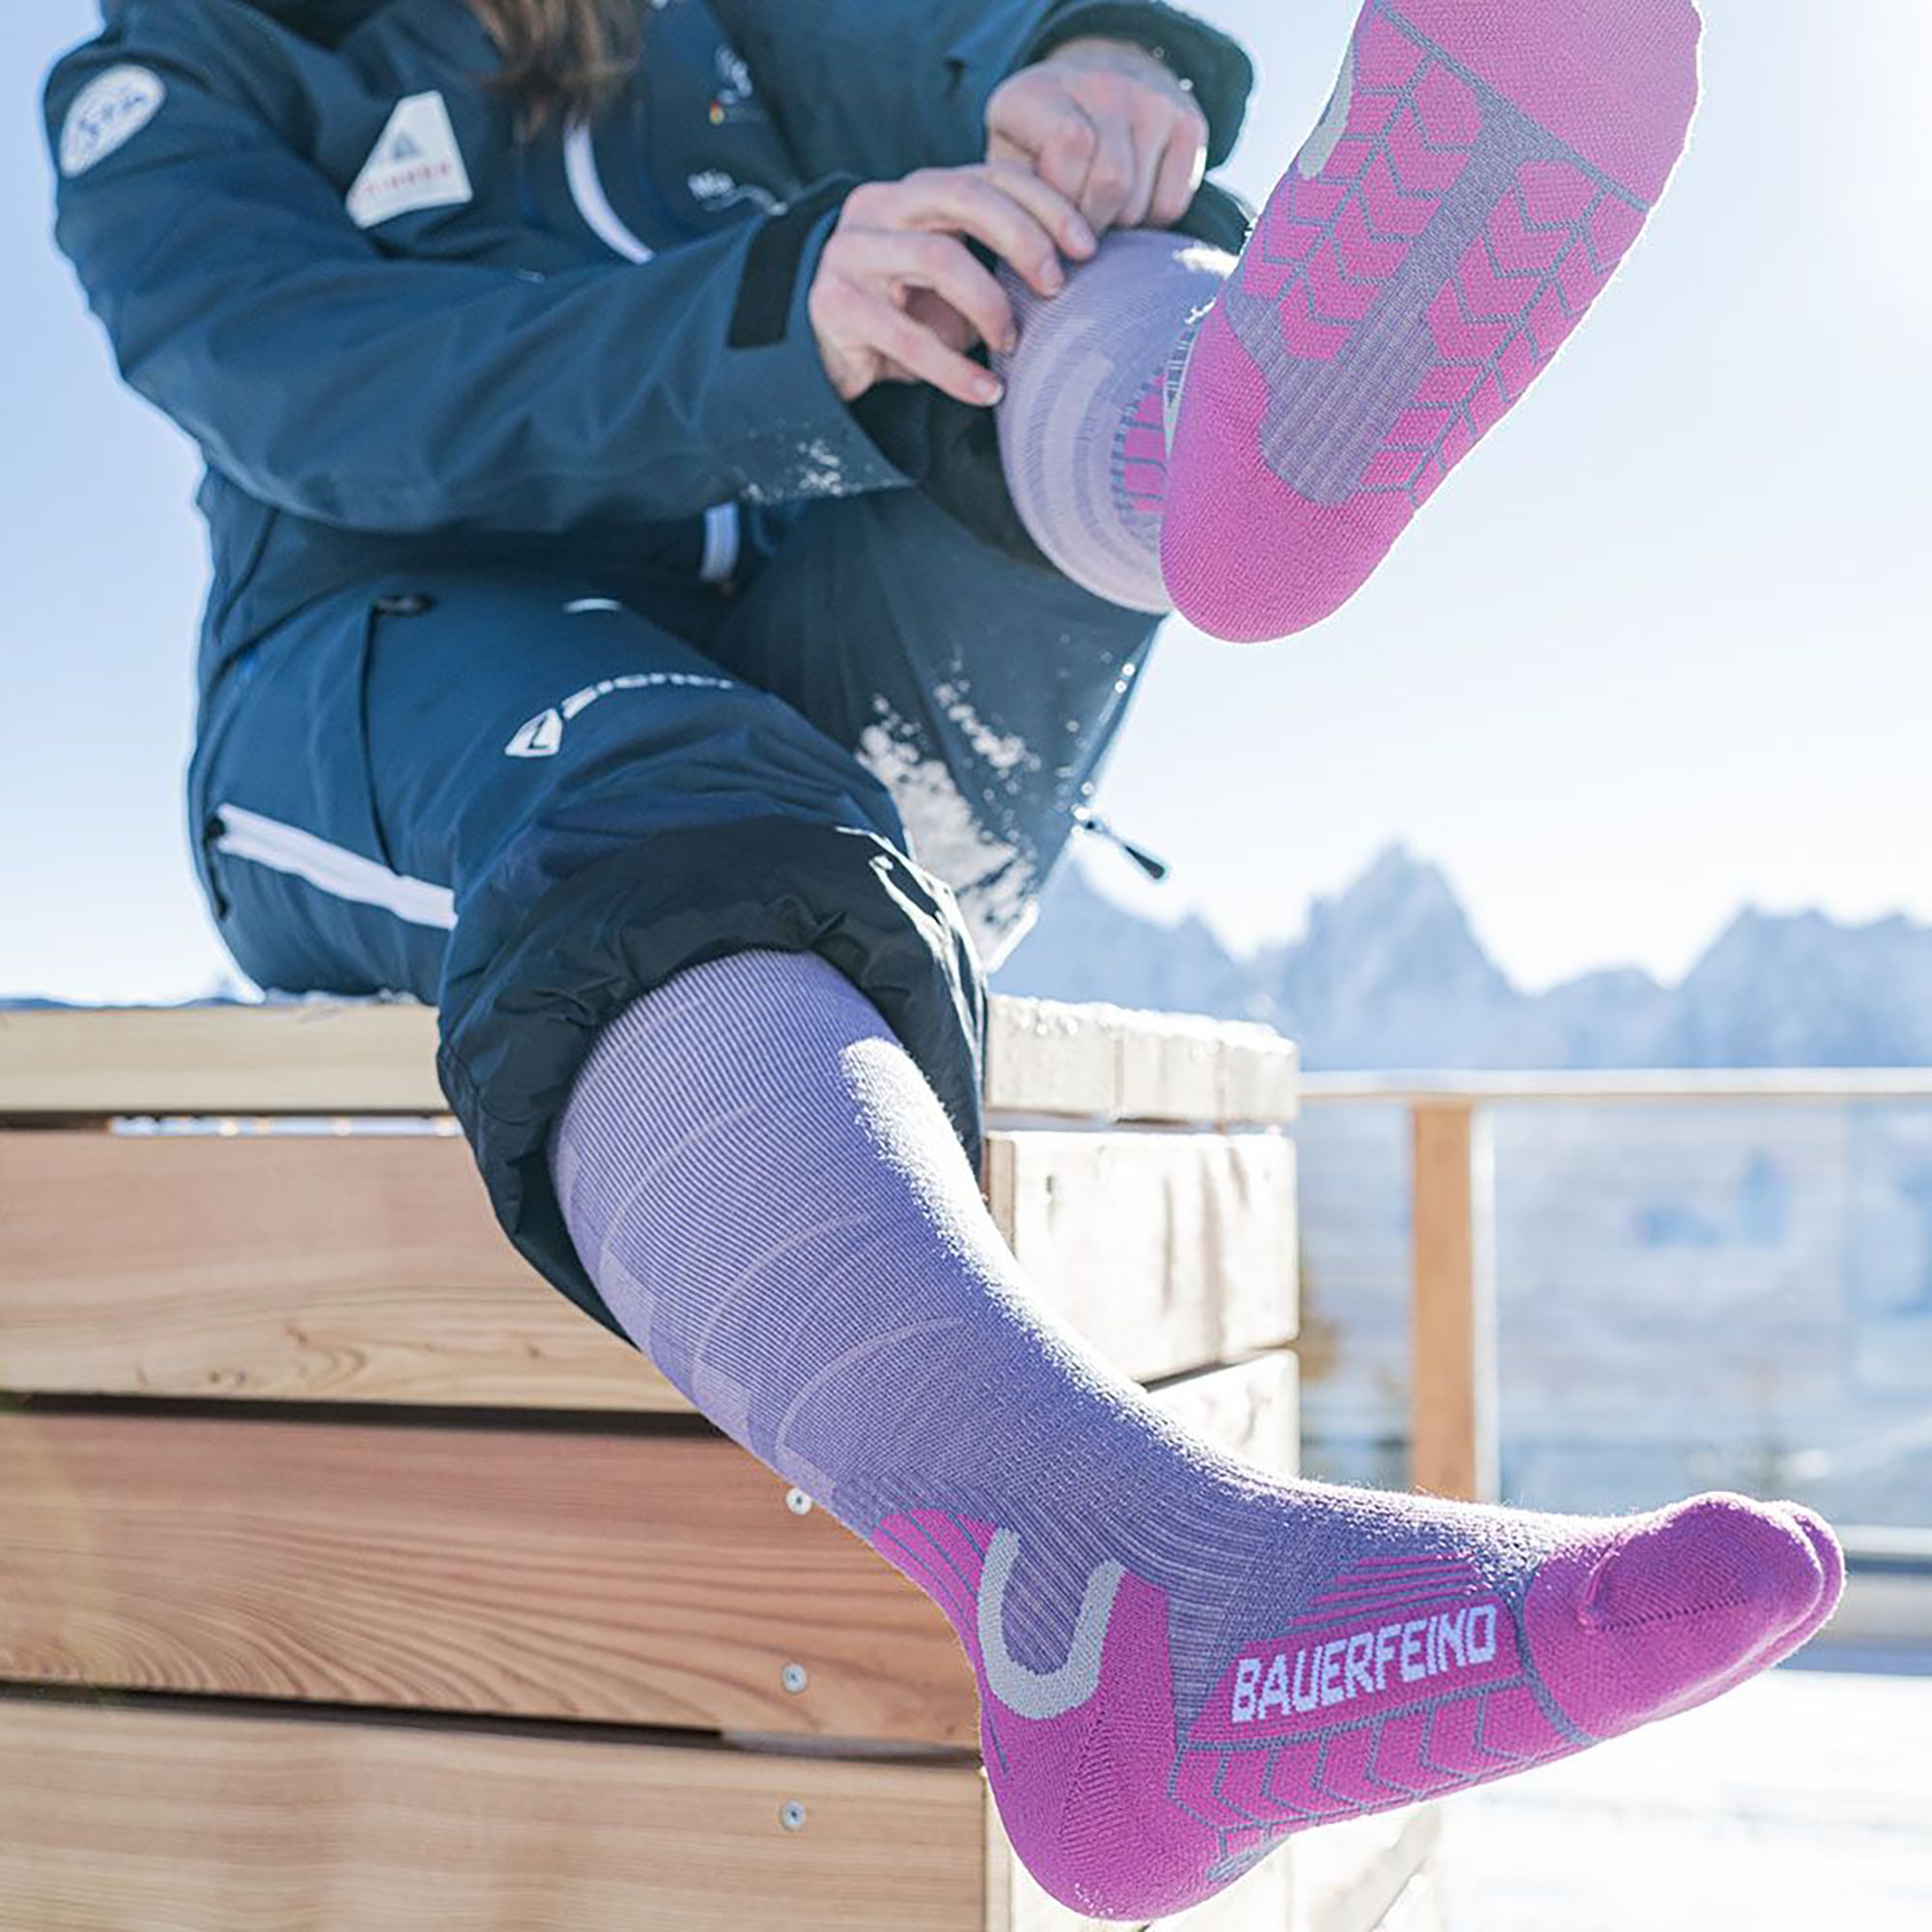 Bauerfeind Sports Ski Touring Compression Socks Damen